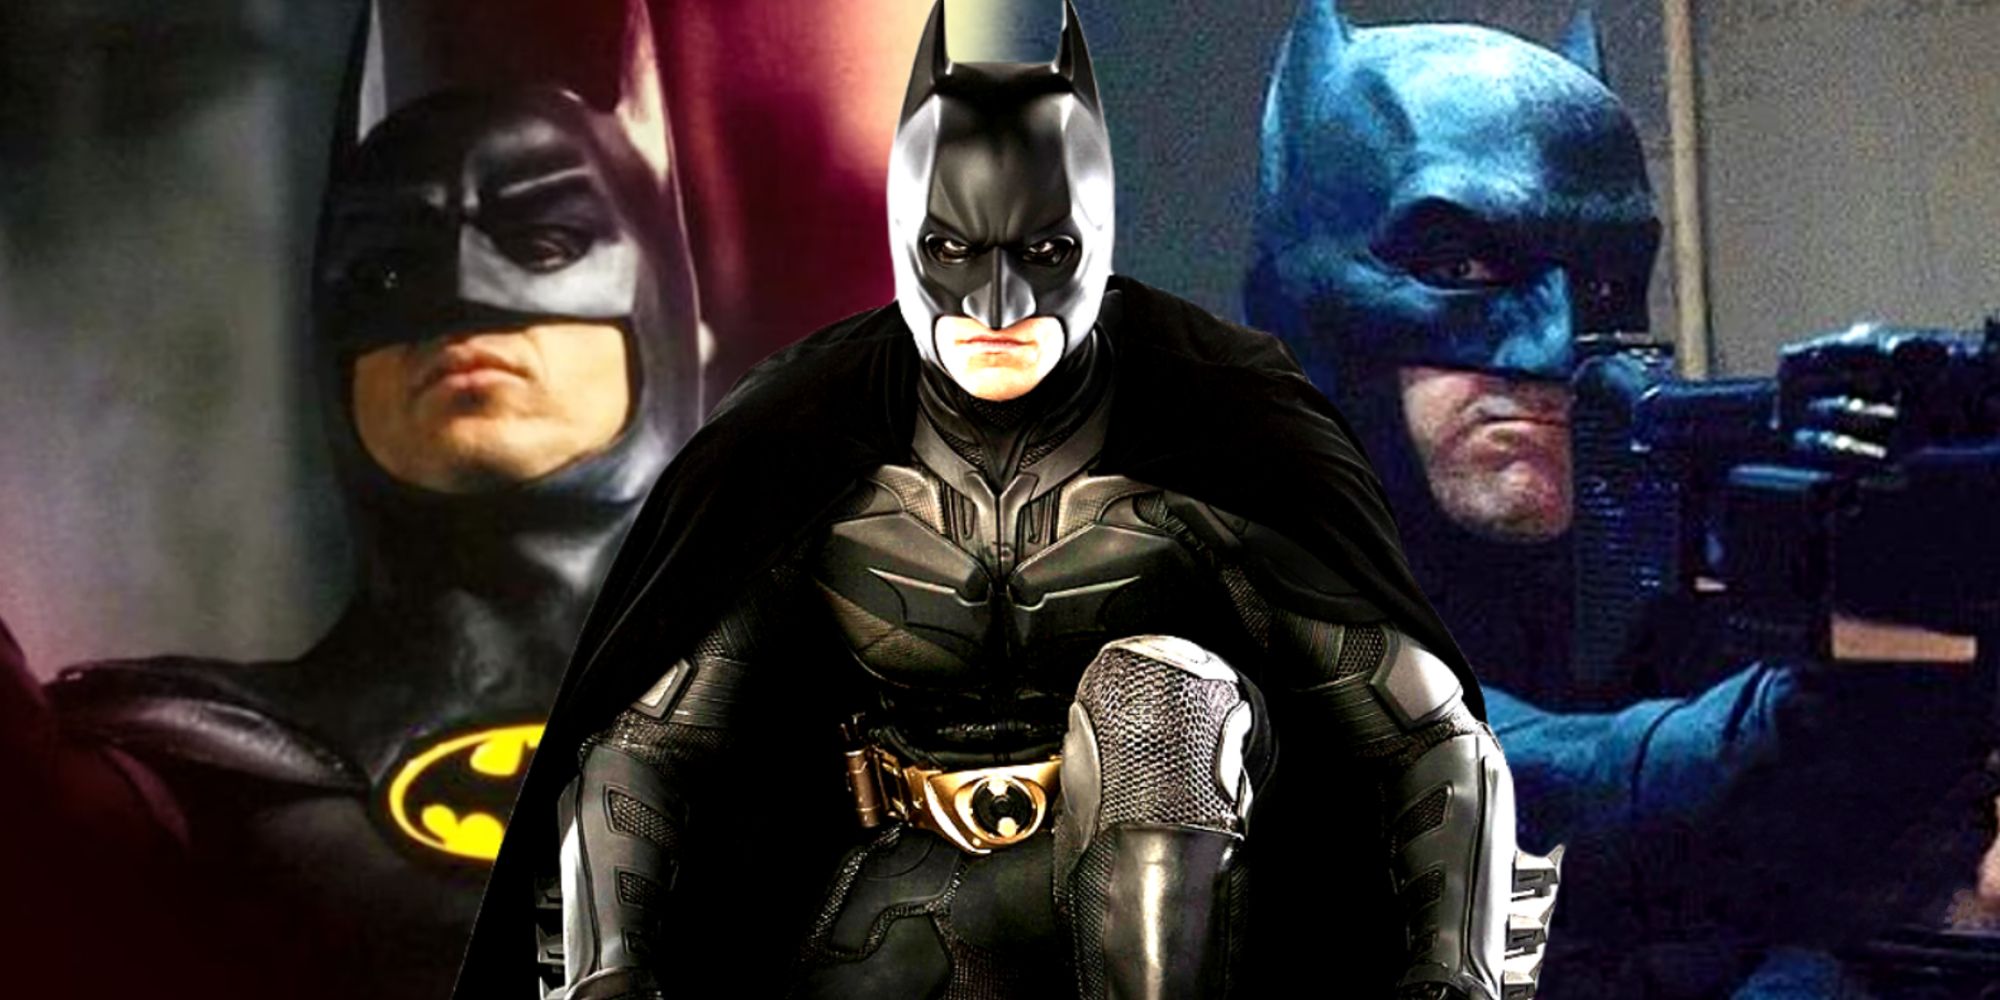 Split image of Michael Keaton, Christian Bale, and Ben Affleck's Batman